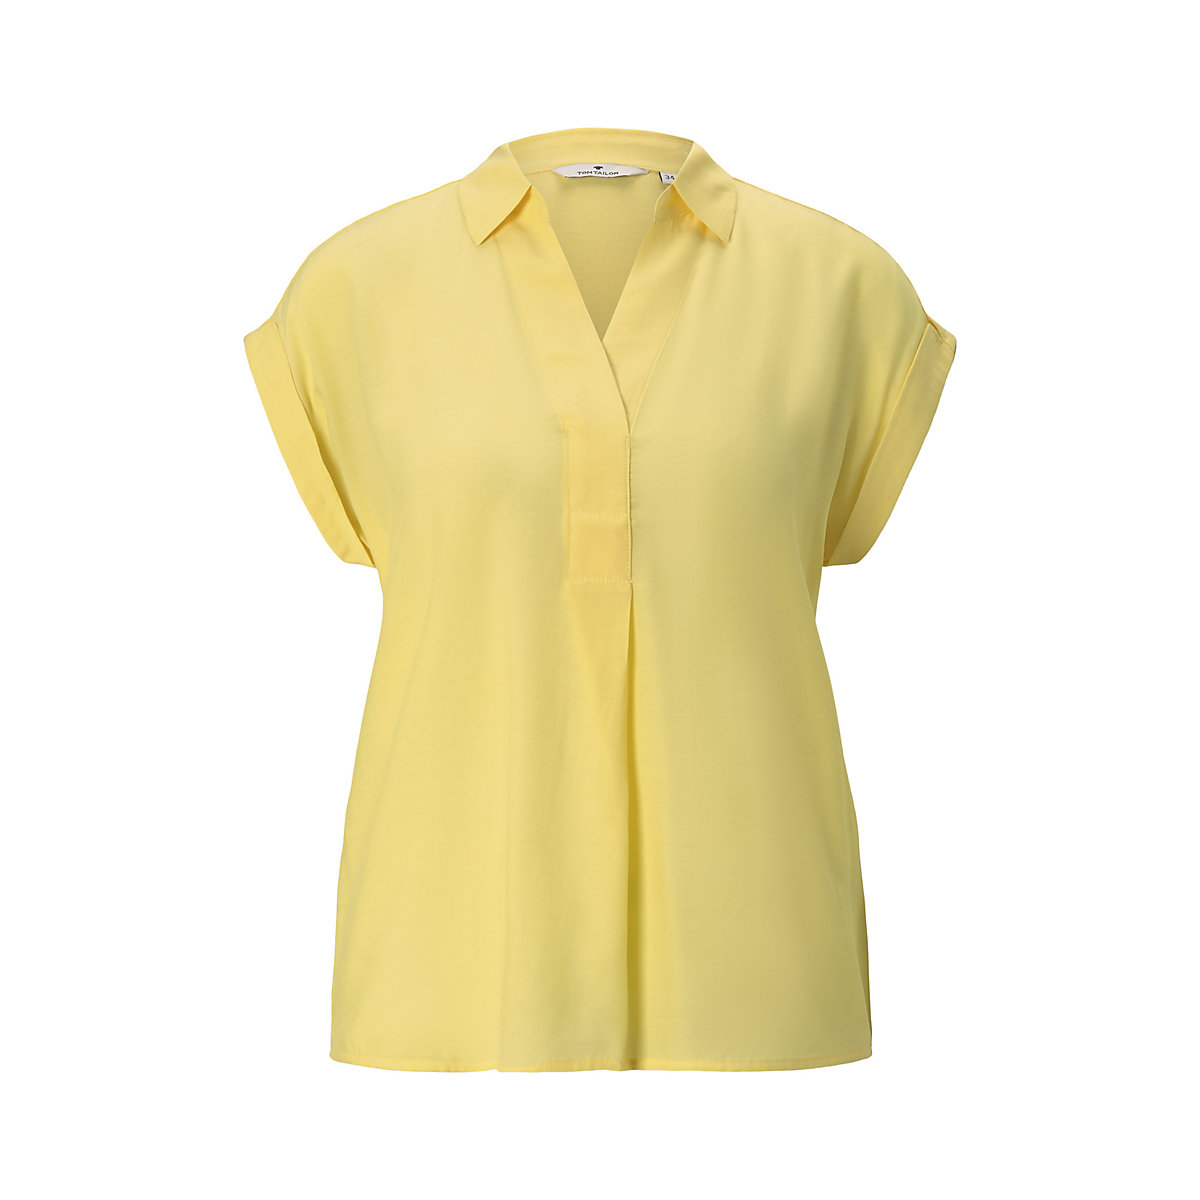 TOM TAILOR Blusen & Shirts Blusenshirt mit Henley-Kragen Langarmblusen gelb